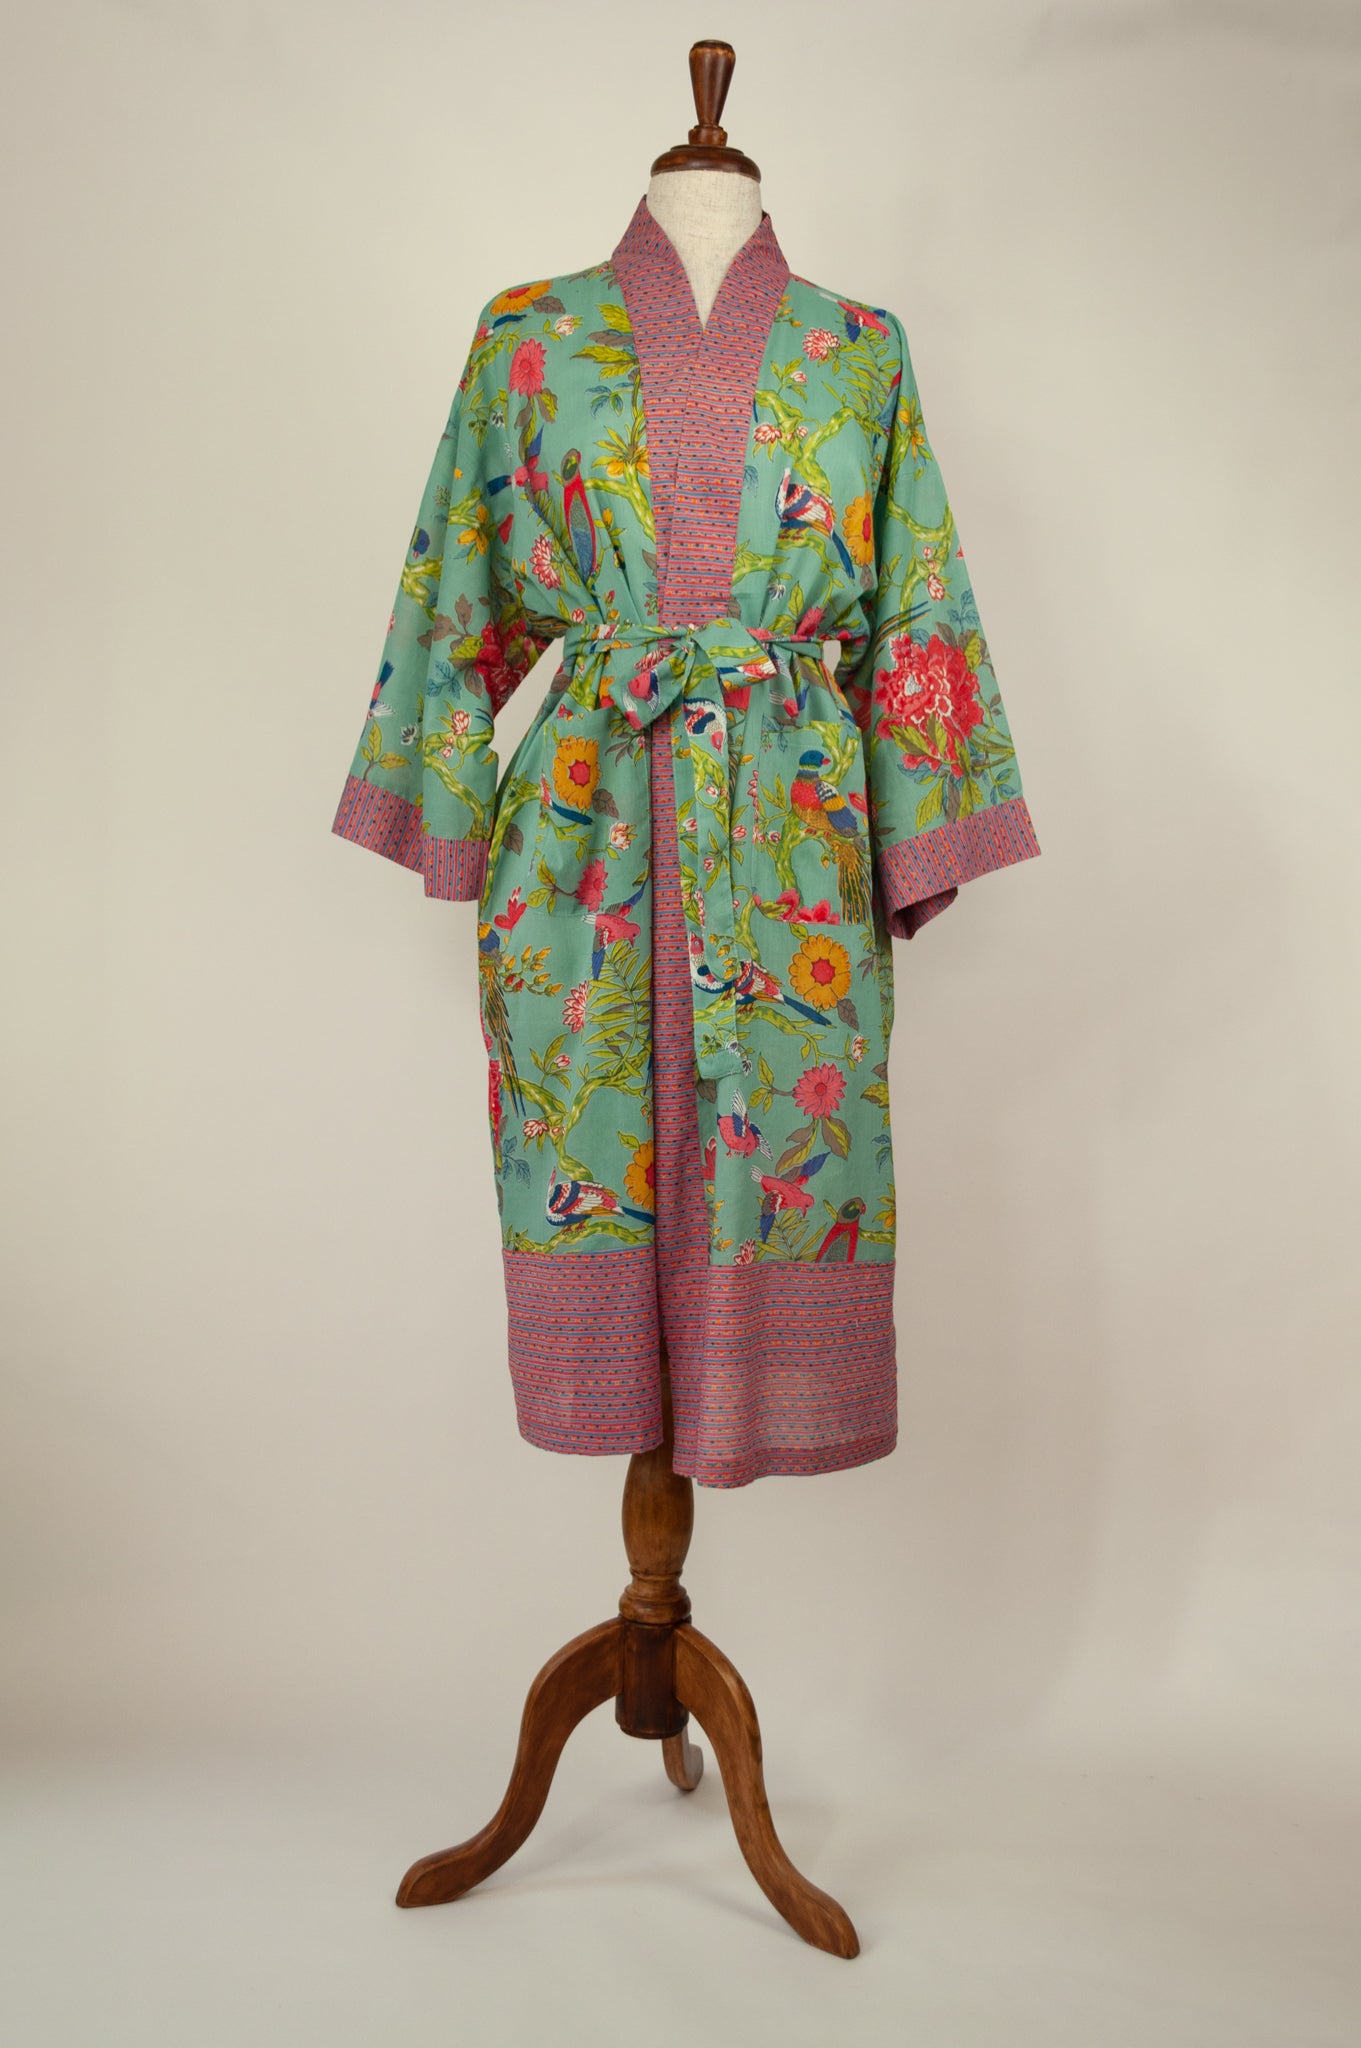 Cotton voile kimono robe dressing gown in aqua bird print with pink trim.